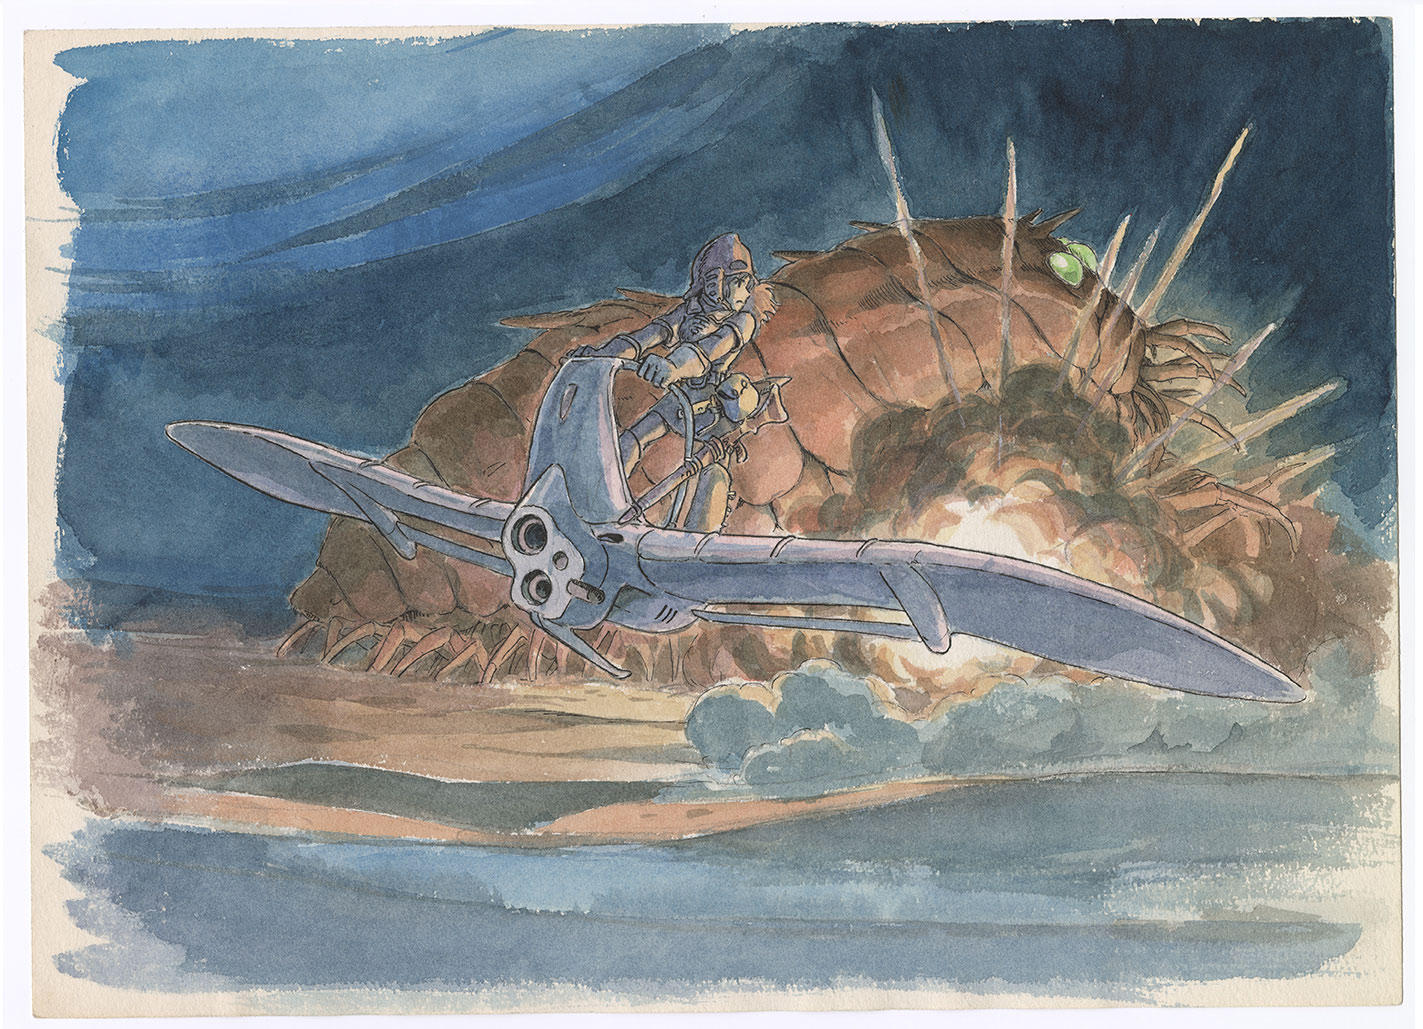 Imageboard by Hayao Miyazaki, "Nausicaä of the Valley of the Wind."